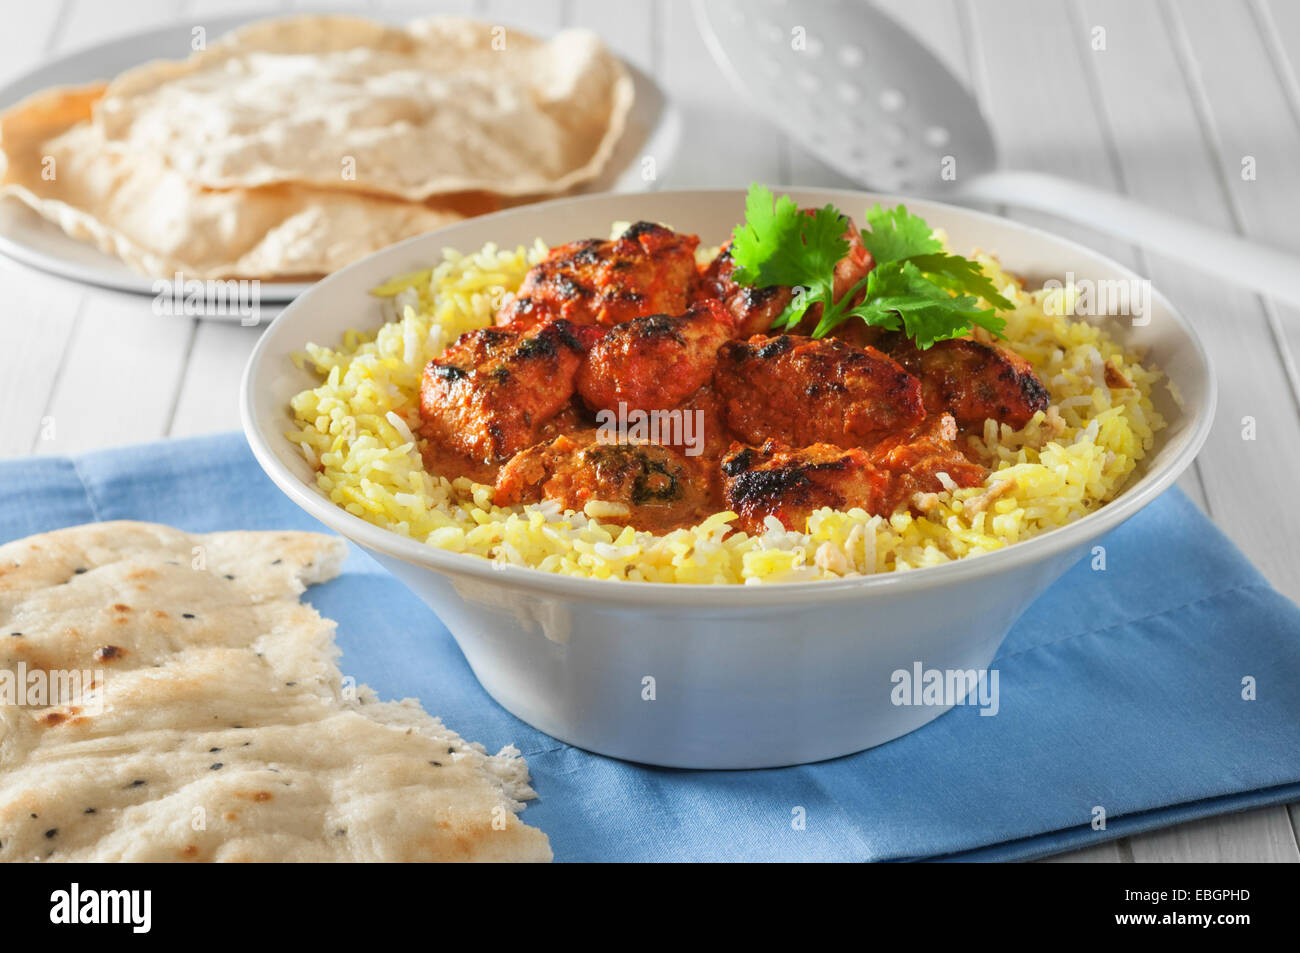 Chicken tikka masala with rice and naan bread. Stock Photo